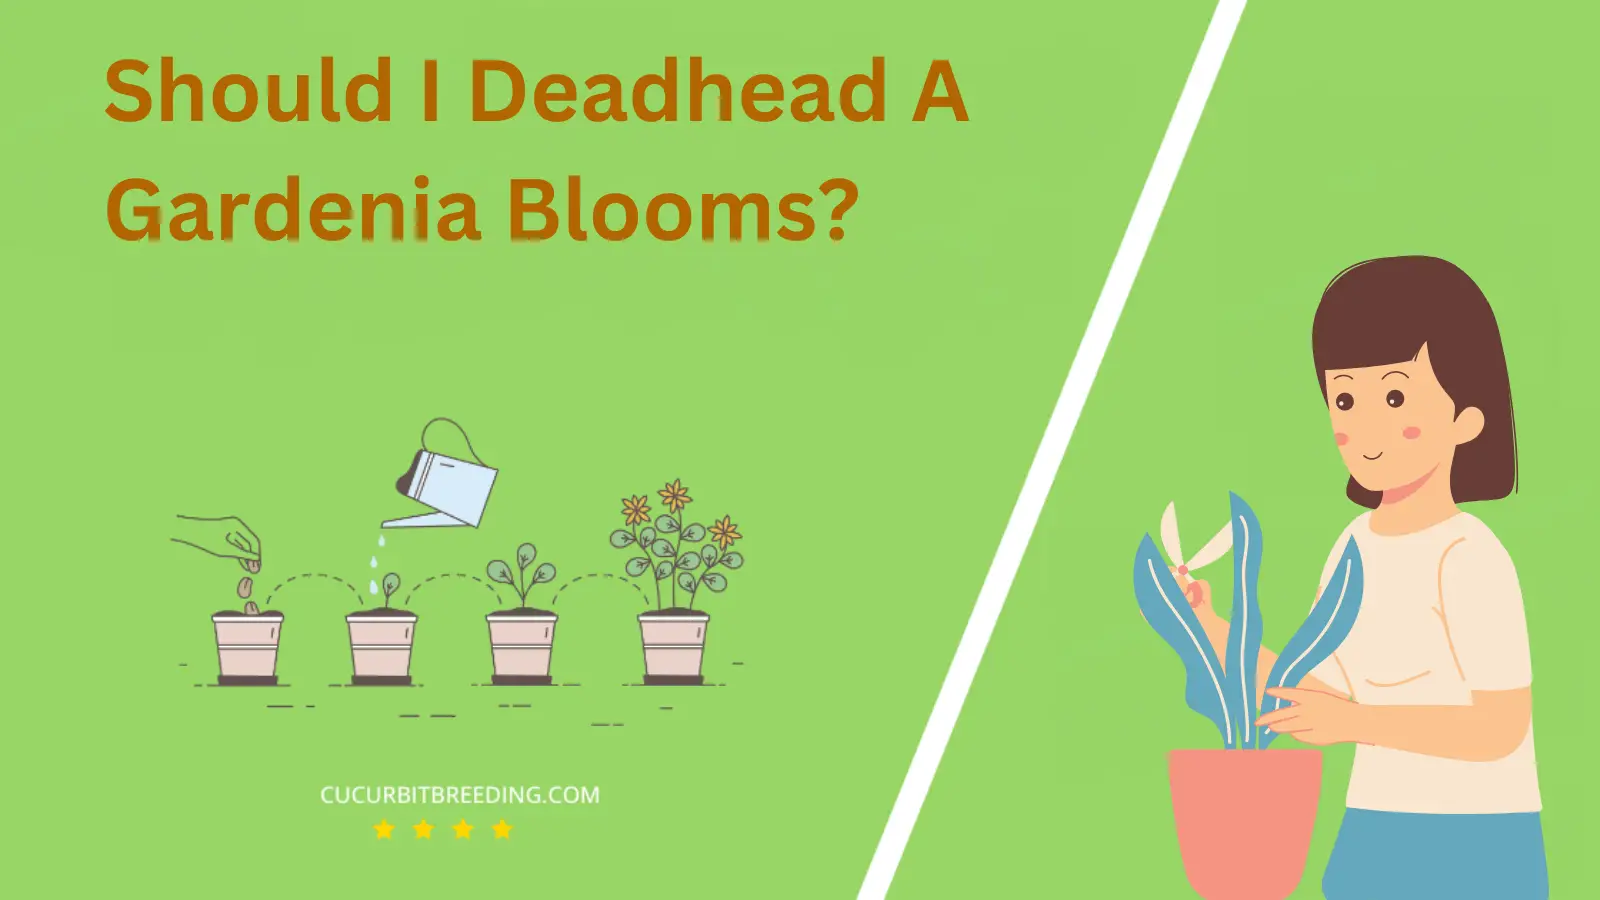 Should I Deadhead A Gardenia Blooms?